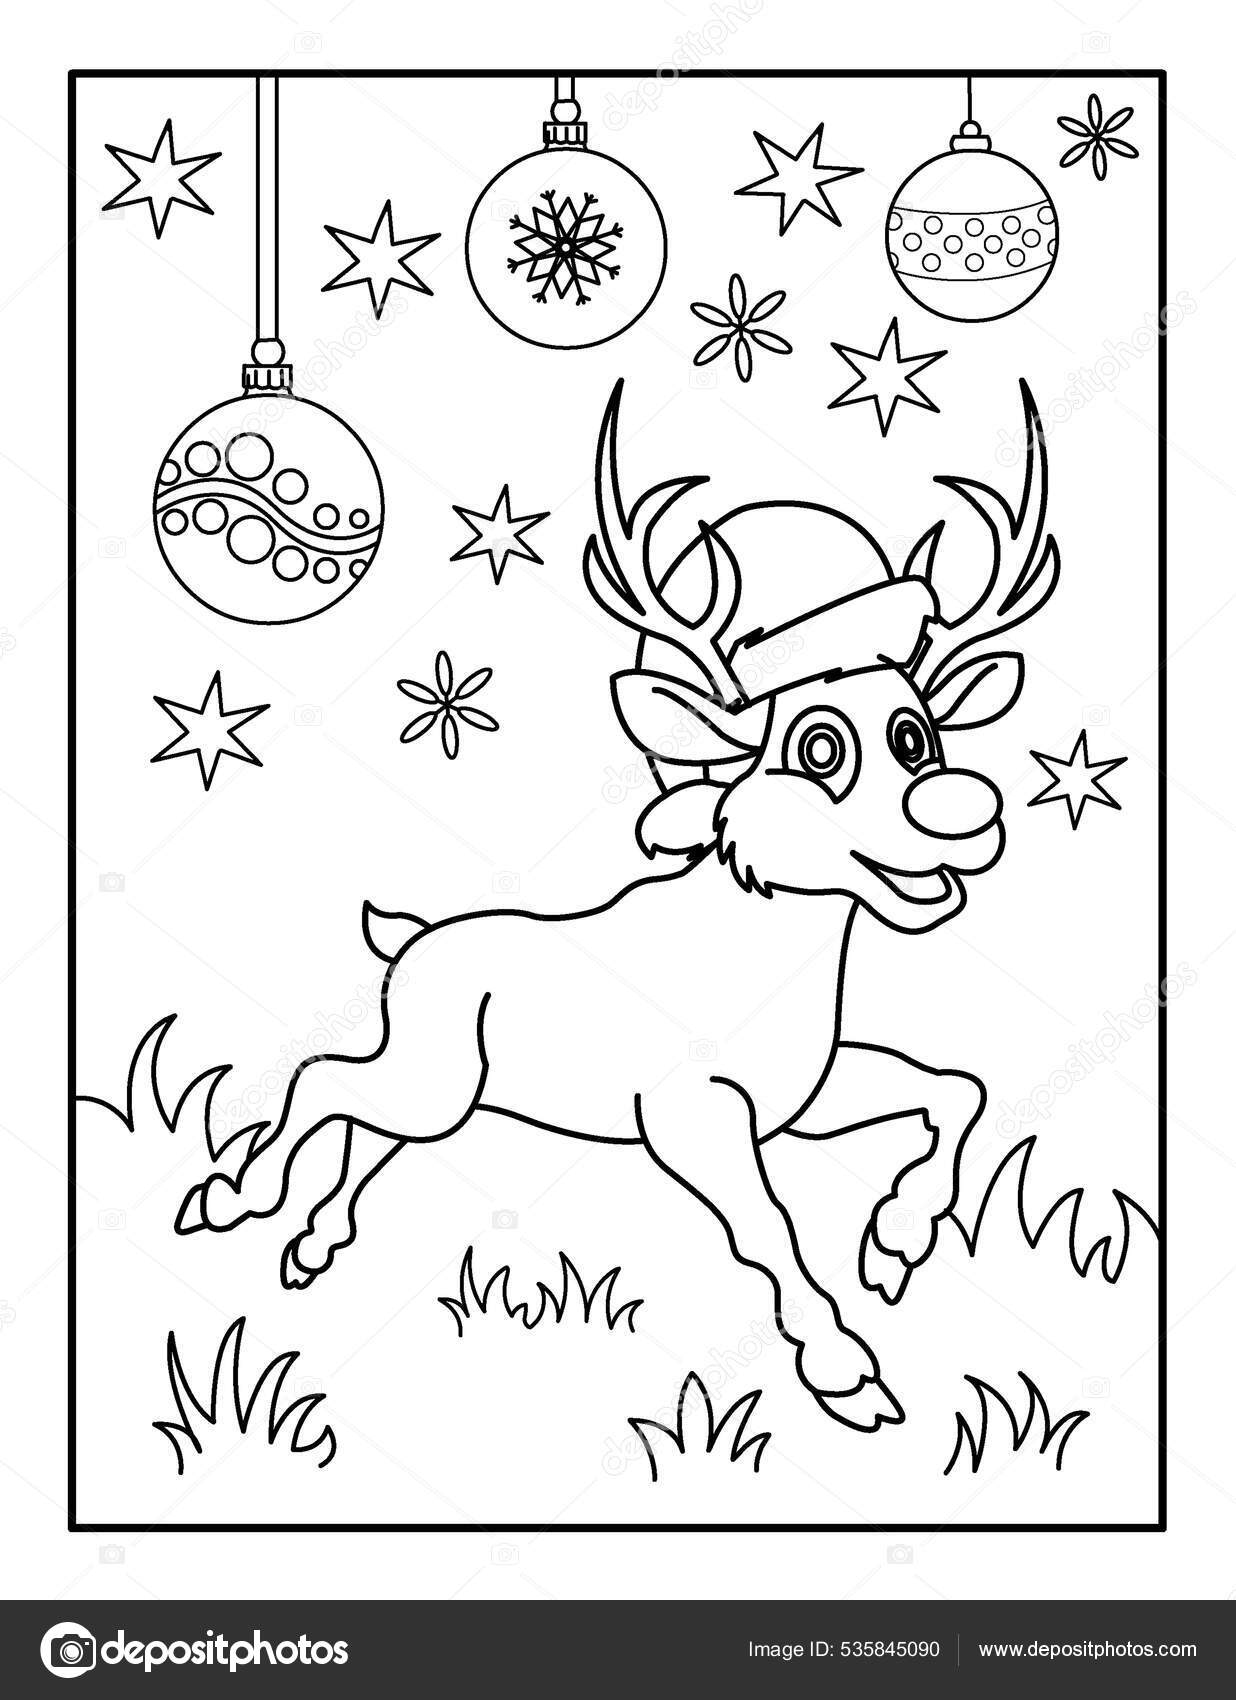 Santa claus coloring page kids stock vector by nipunkundu